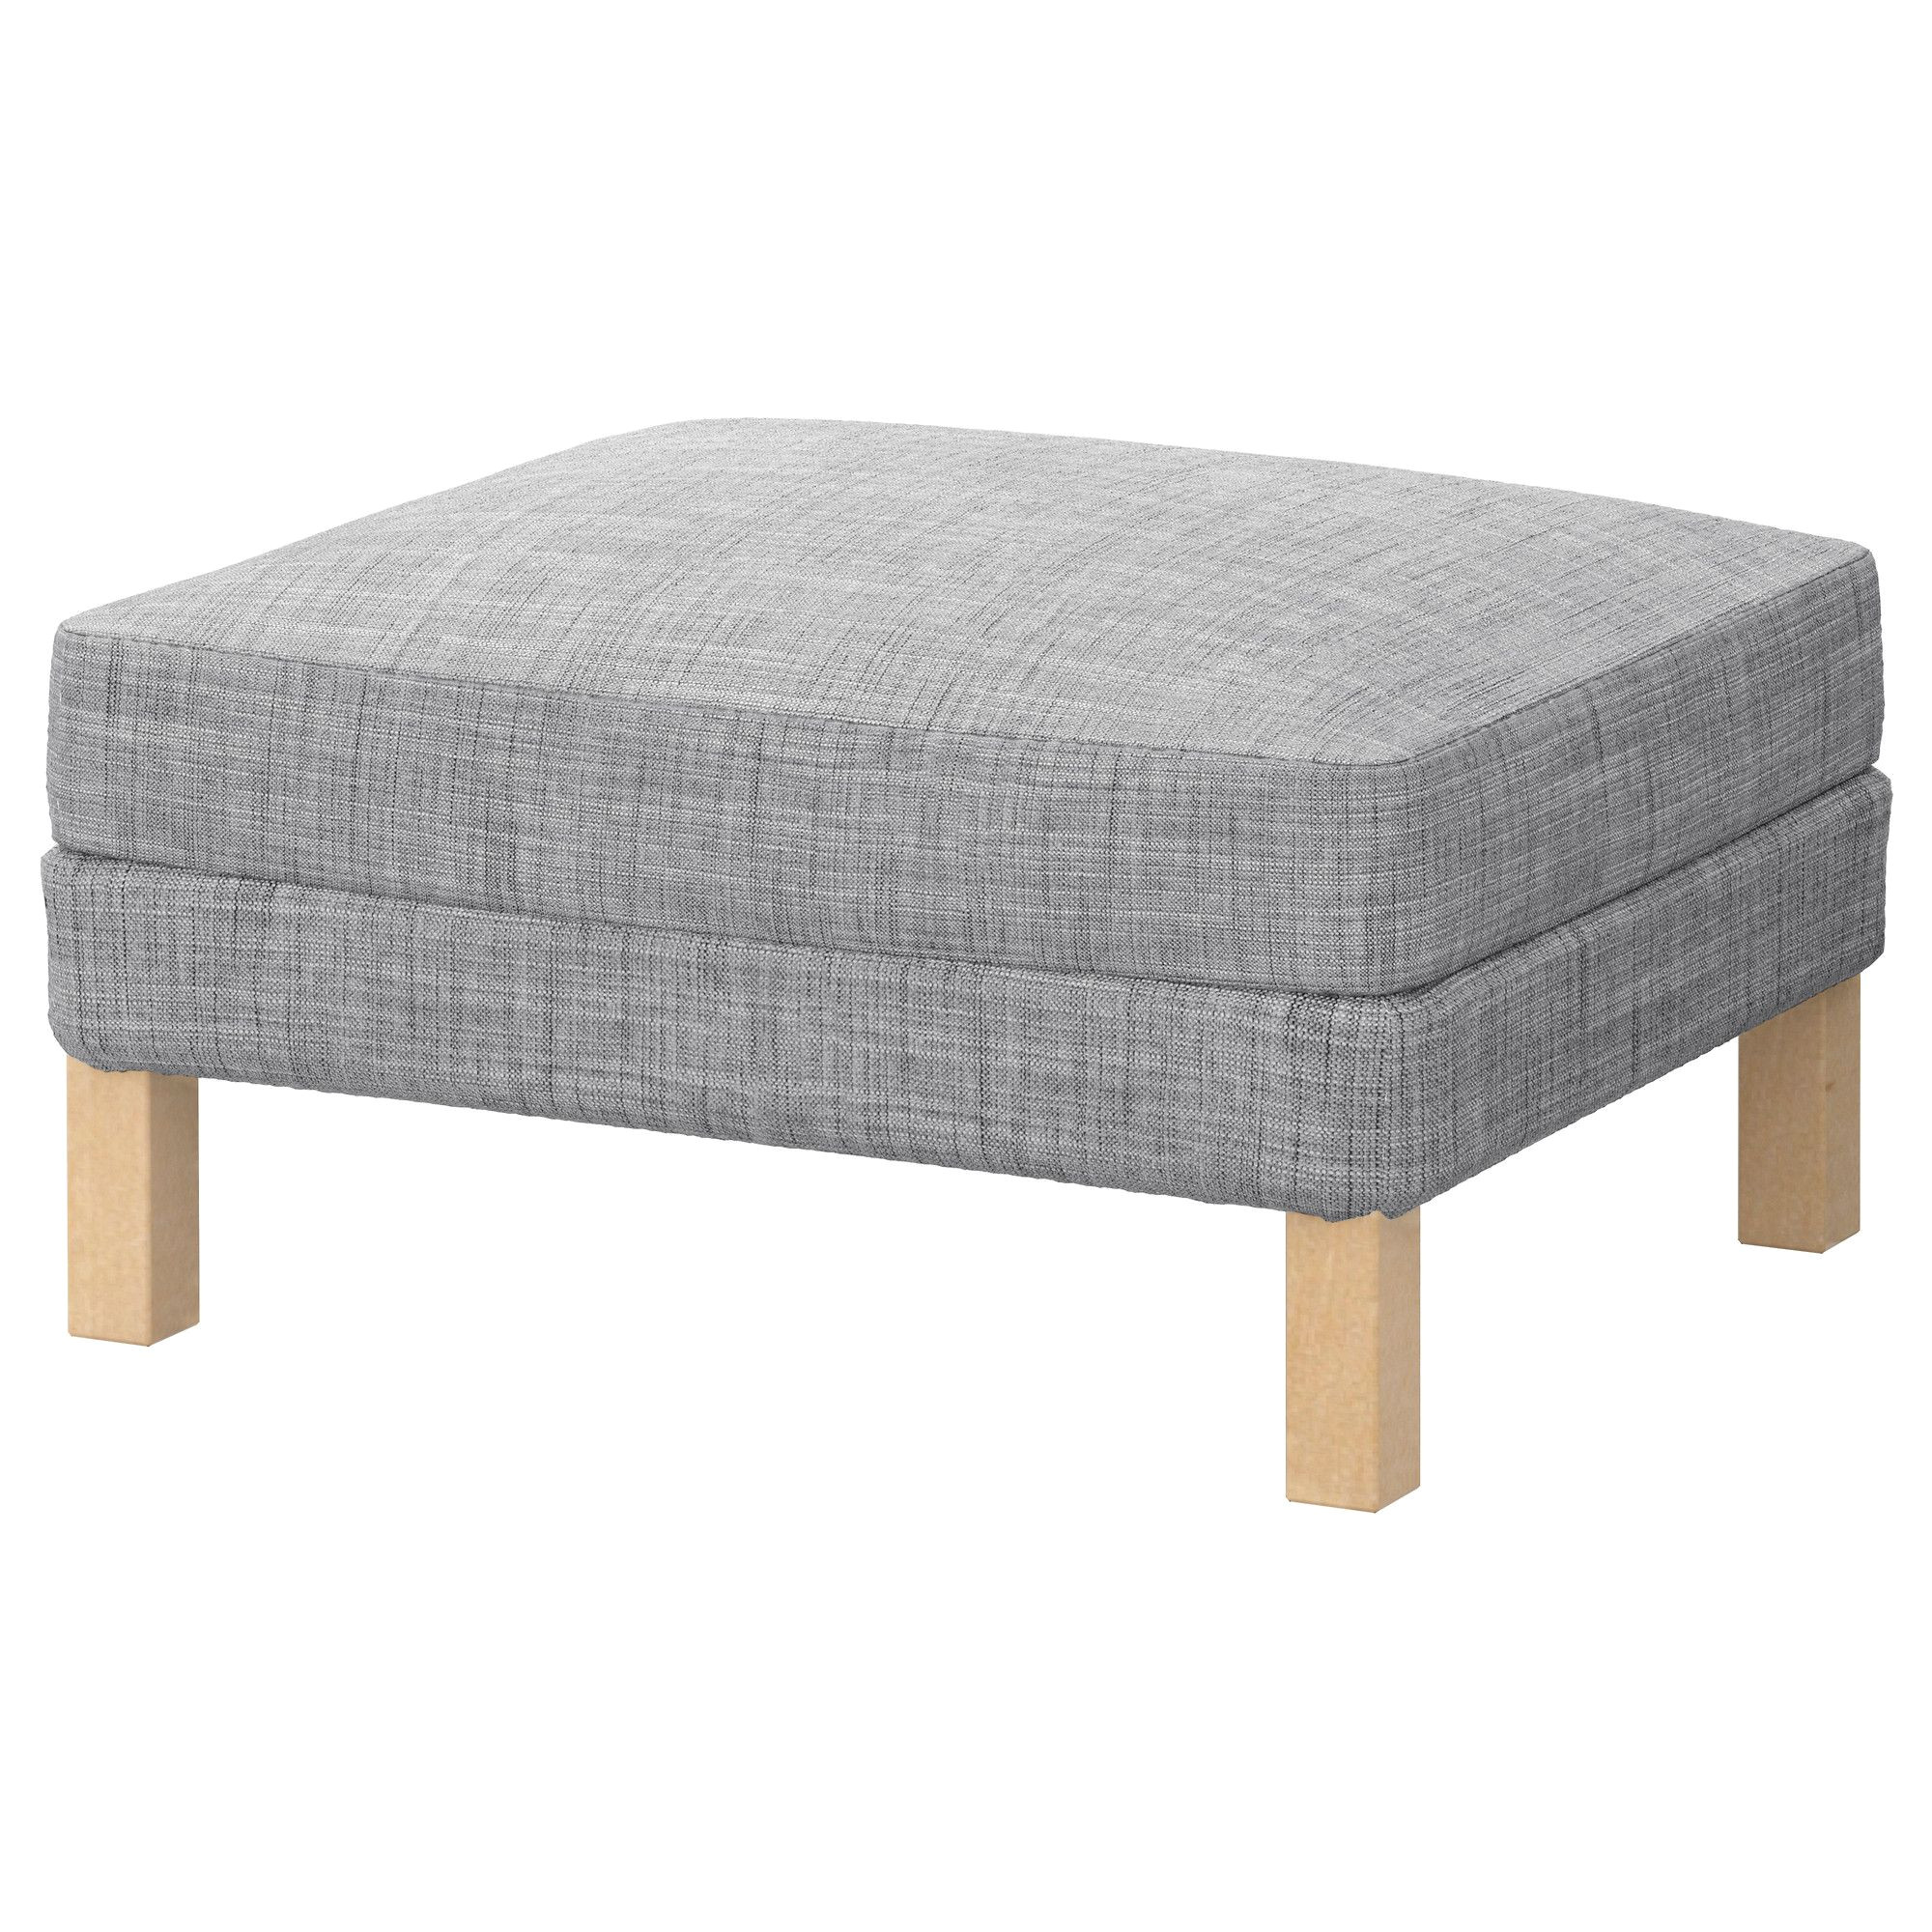 Washing Ikea sofa Covers Karlstad Karlstad Cover Footstool isunda Gray Ikea Like the Karlstad as A